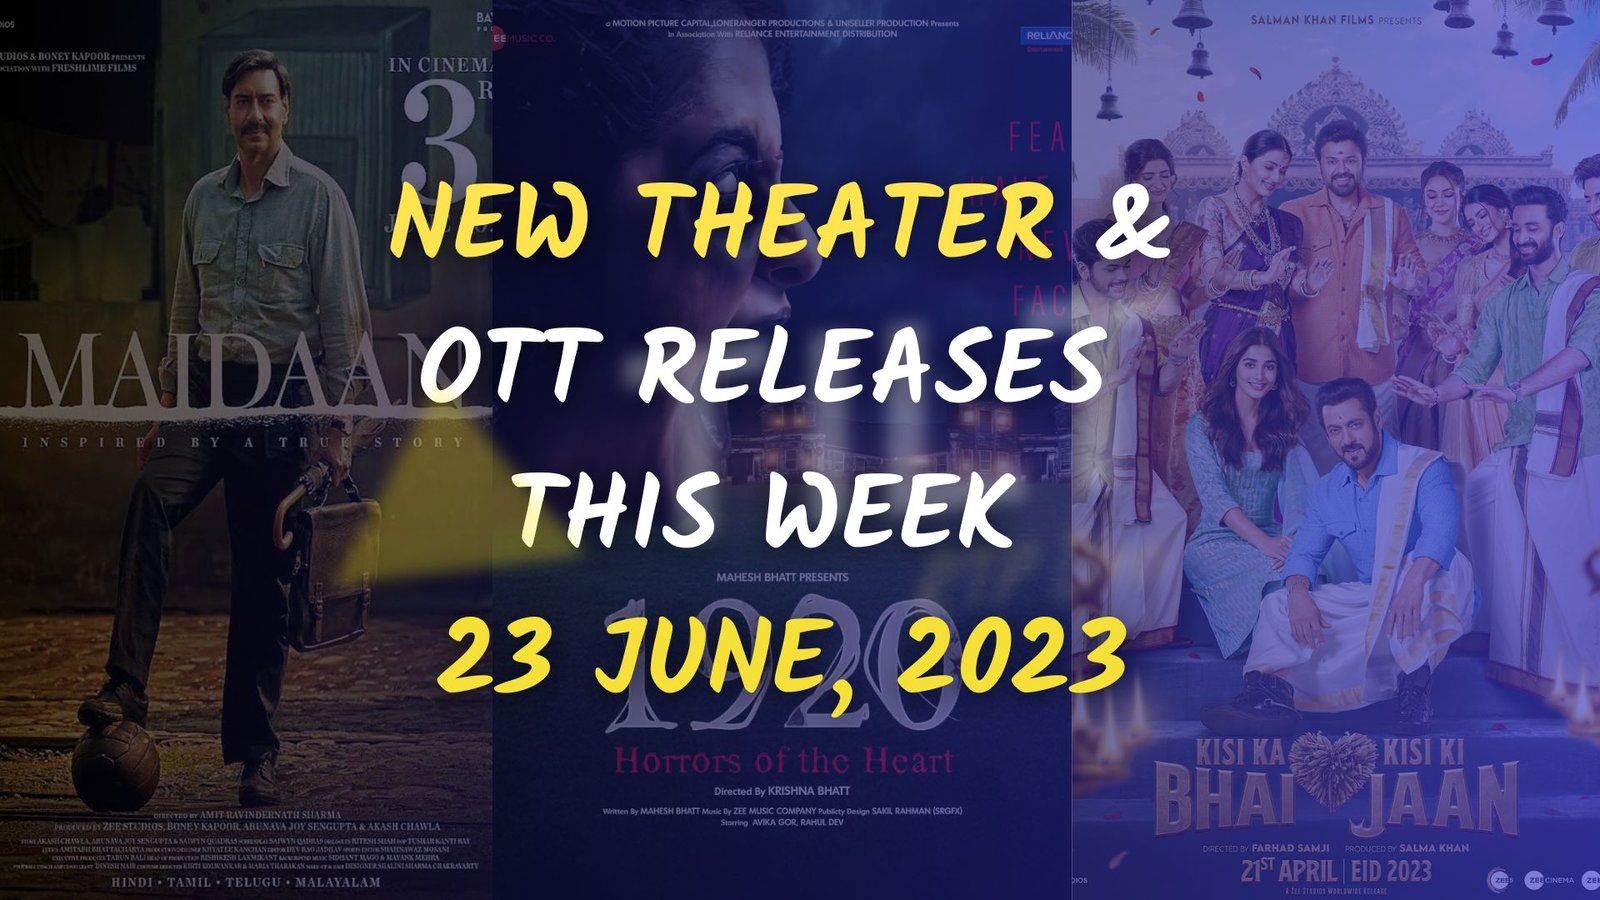 New theater & OTT releases this week 23 June, 2023 - Triangle Tilt